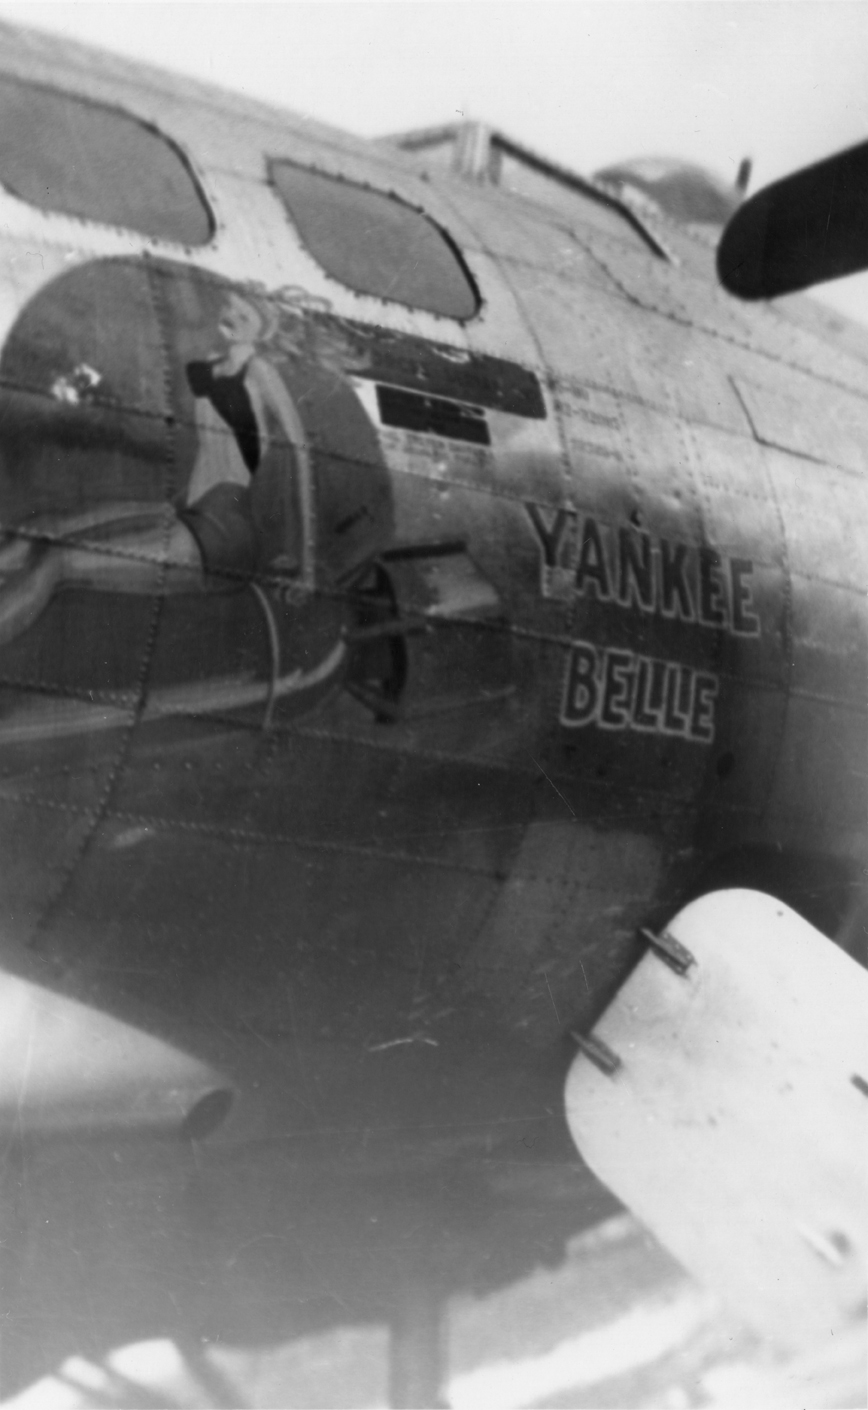 B-17 #42-32085 / Yankee Belle